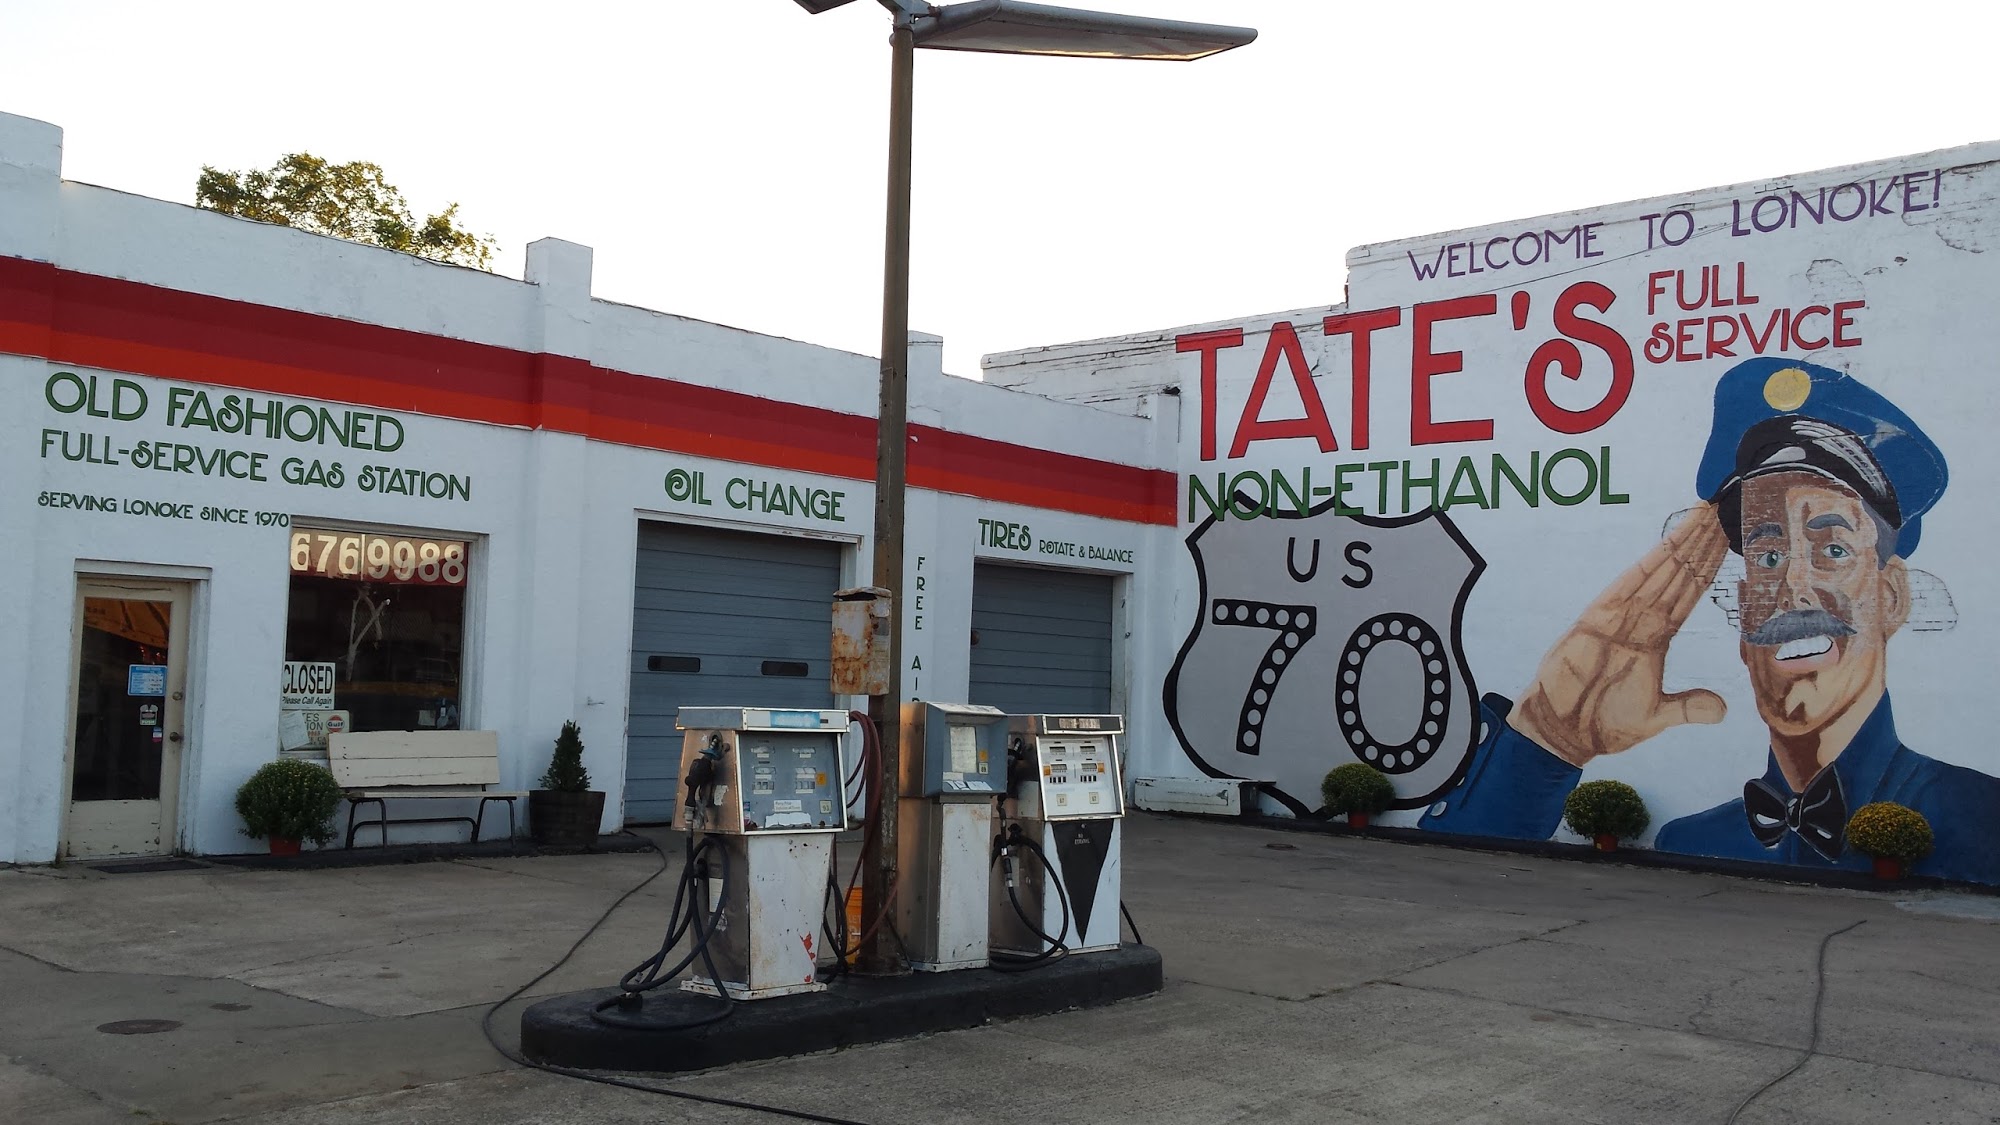 Tate's Station